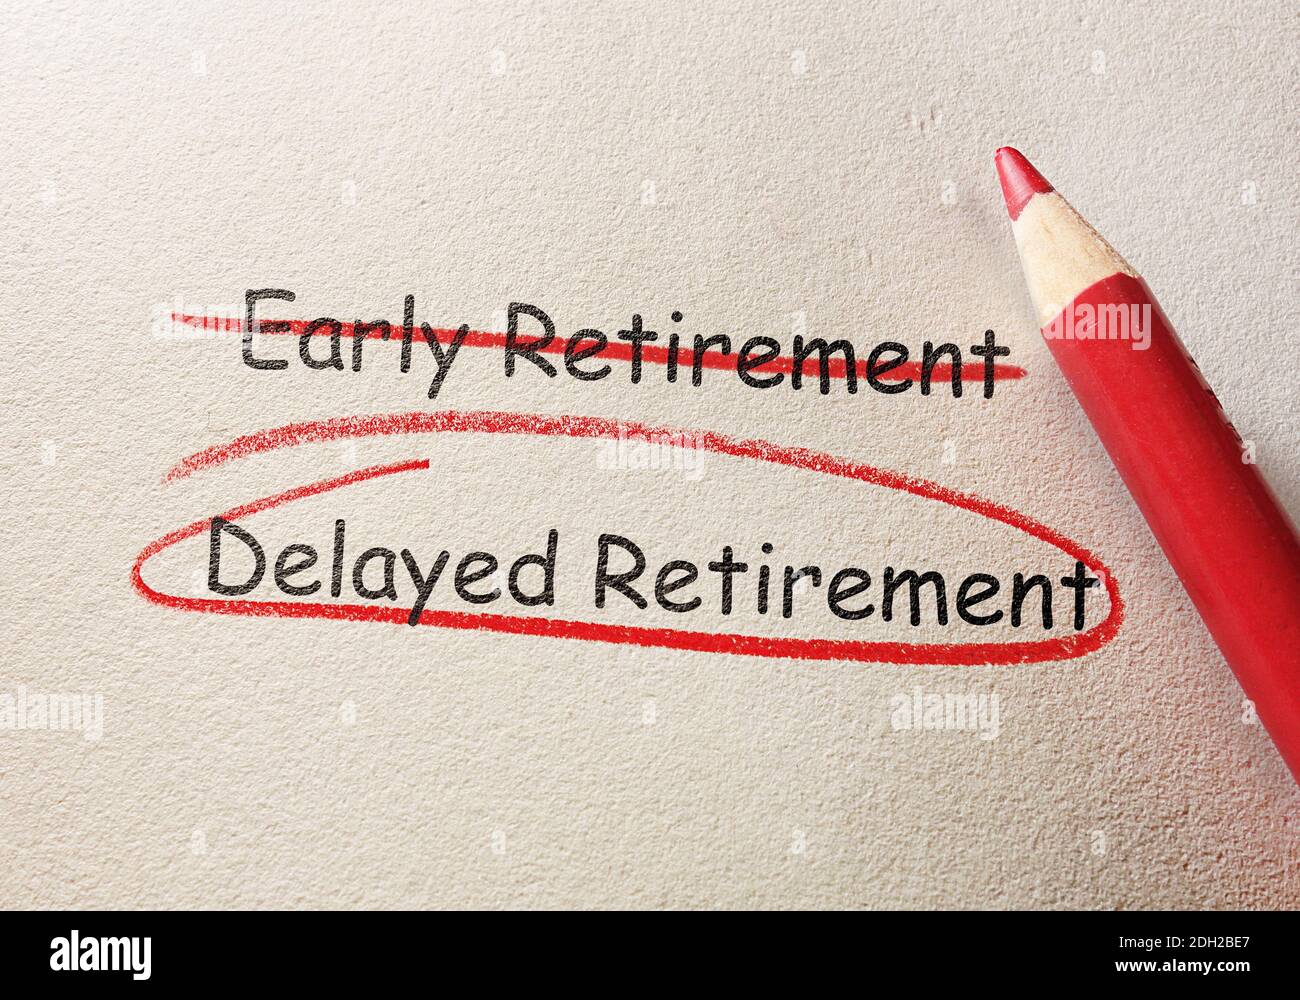 Delayed Retirement concept Stock Photo